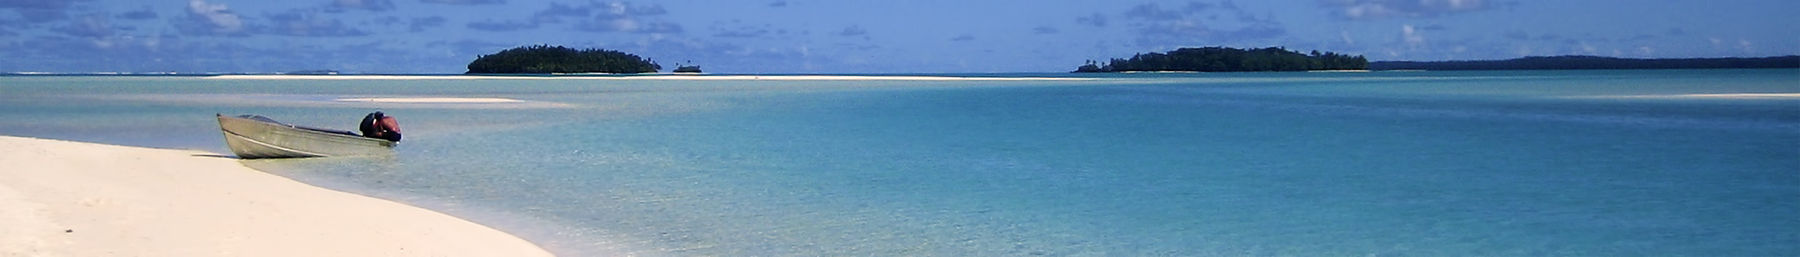 Cookinseln Strand banner.jpg